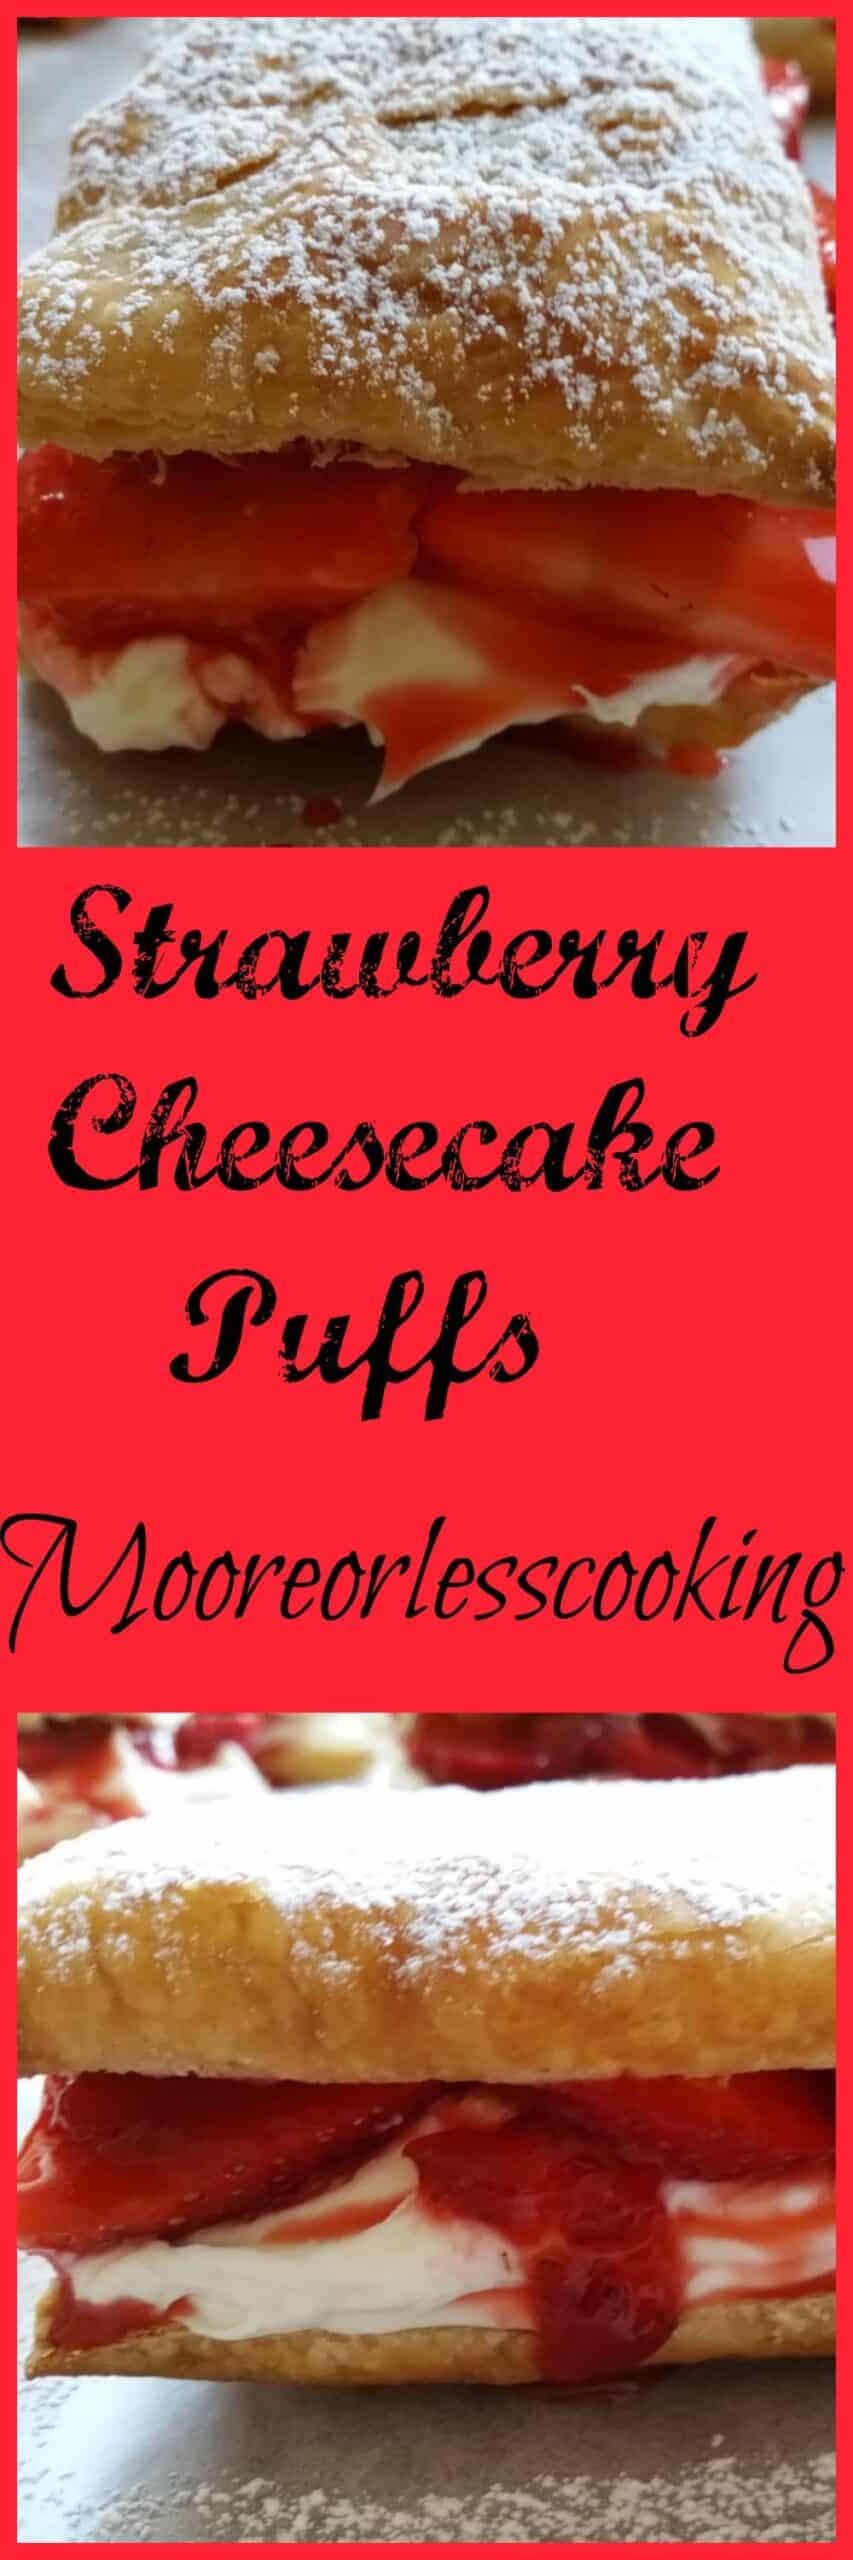 Strawberry Cheesecake Puffs